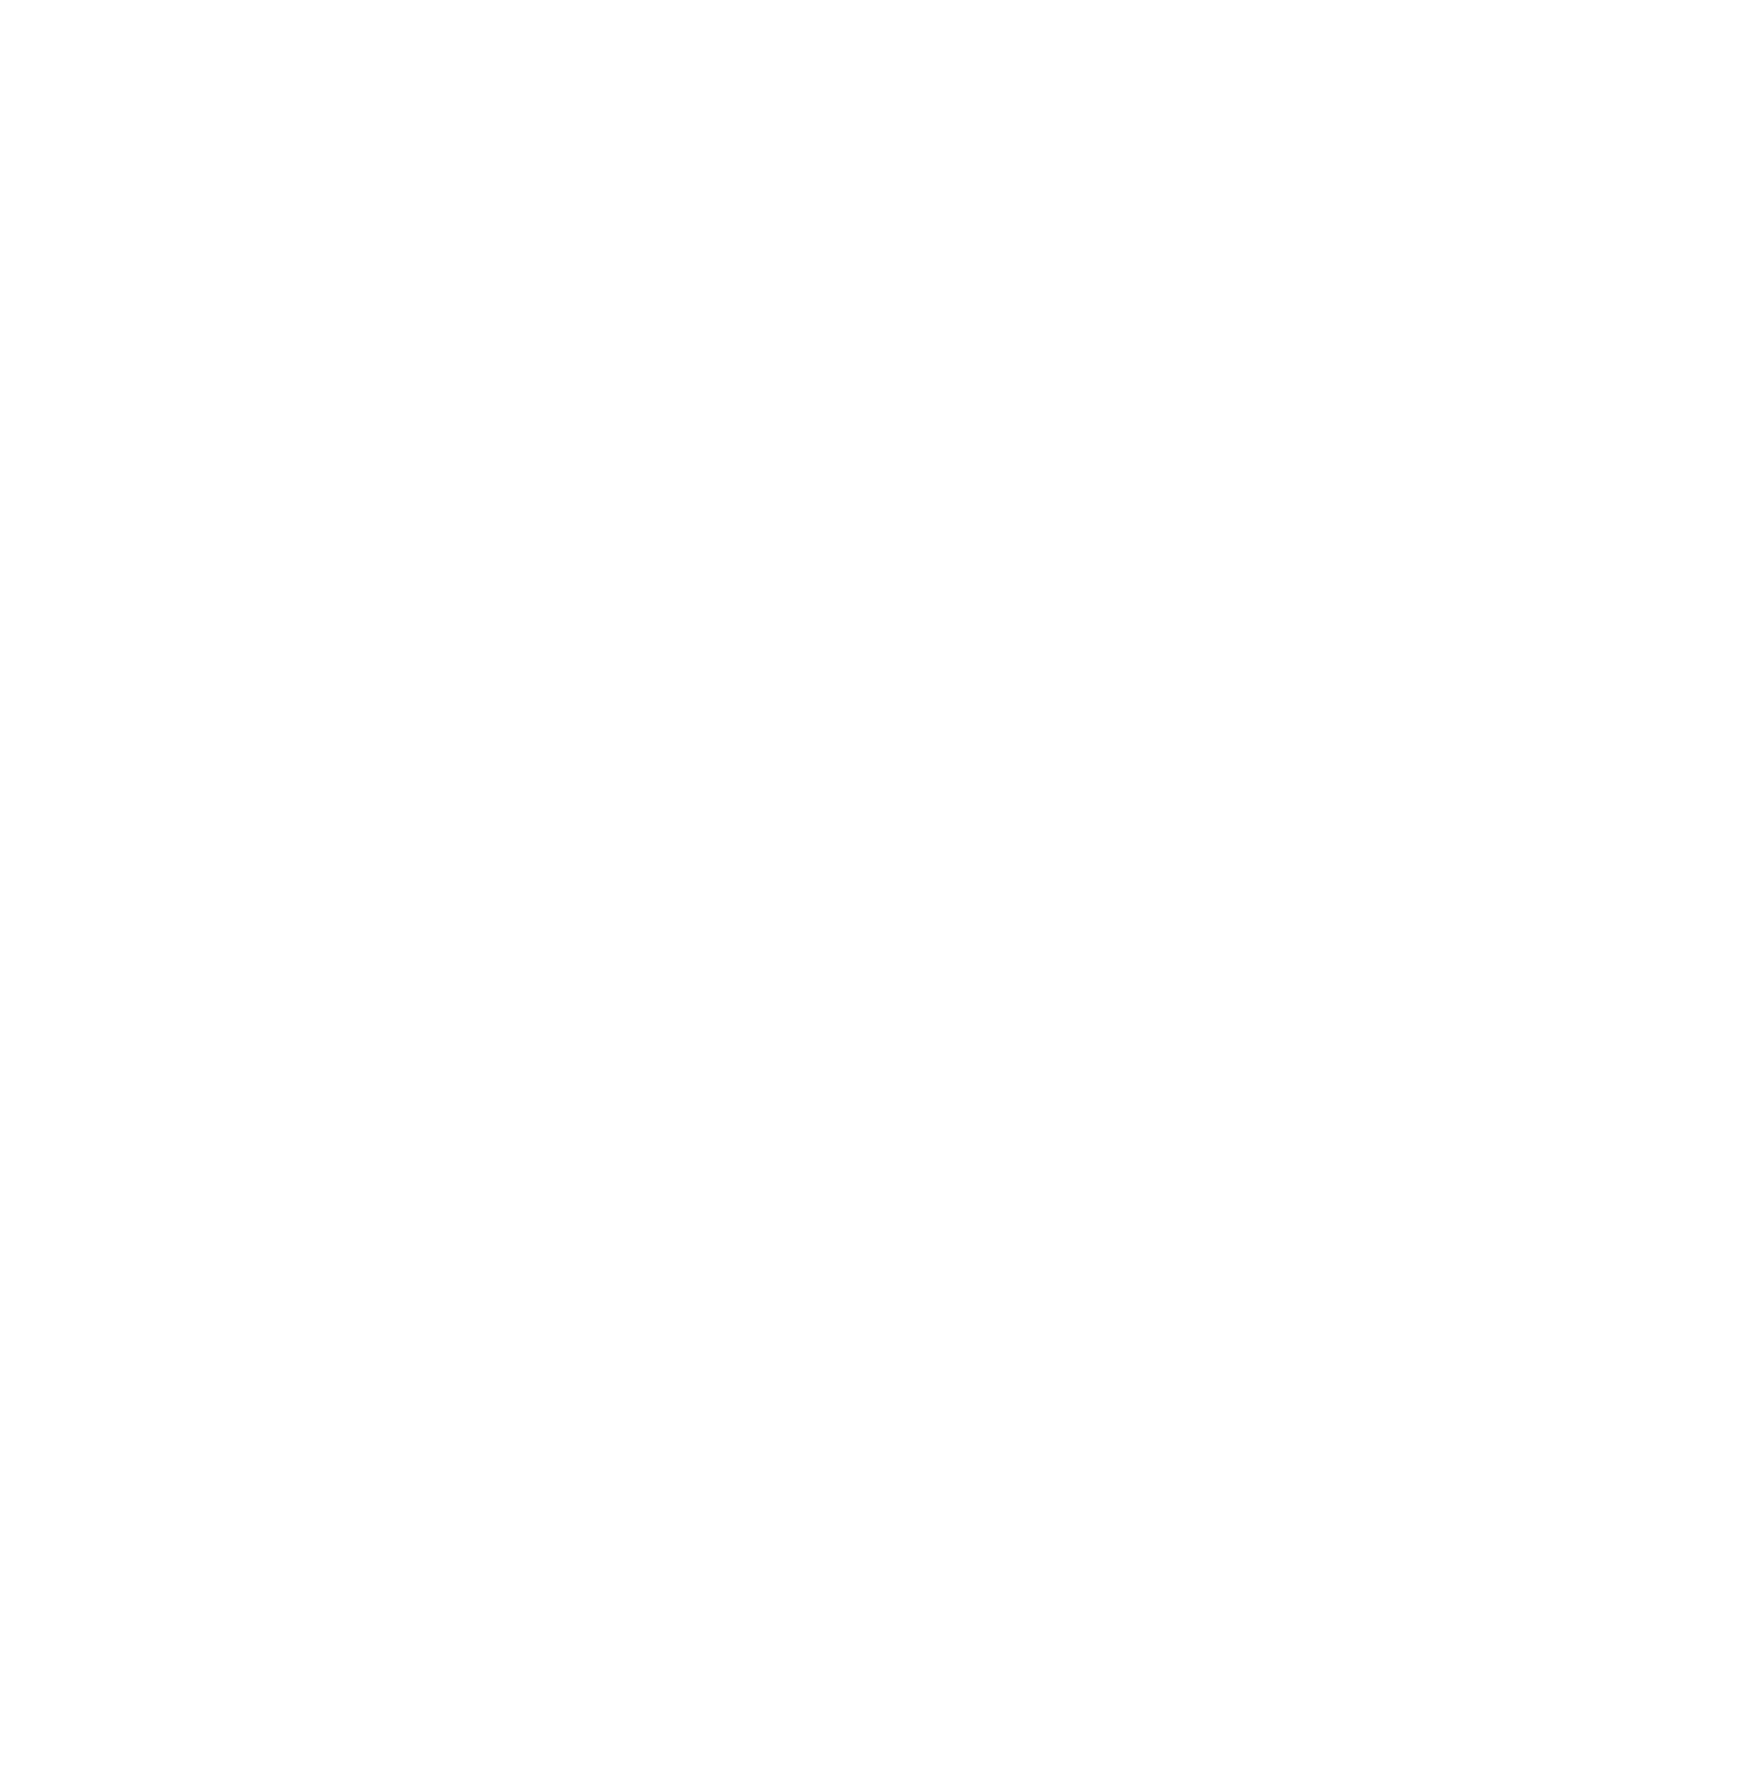 waliya sport betting today